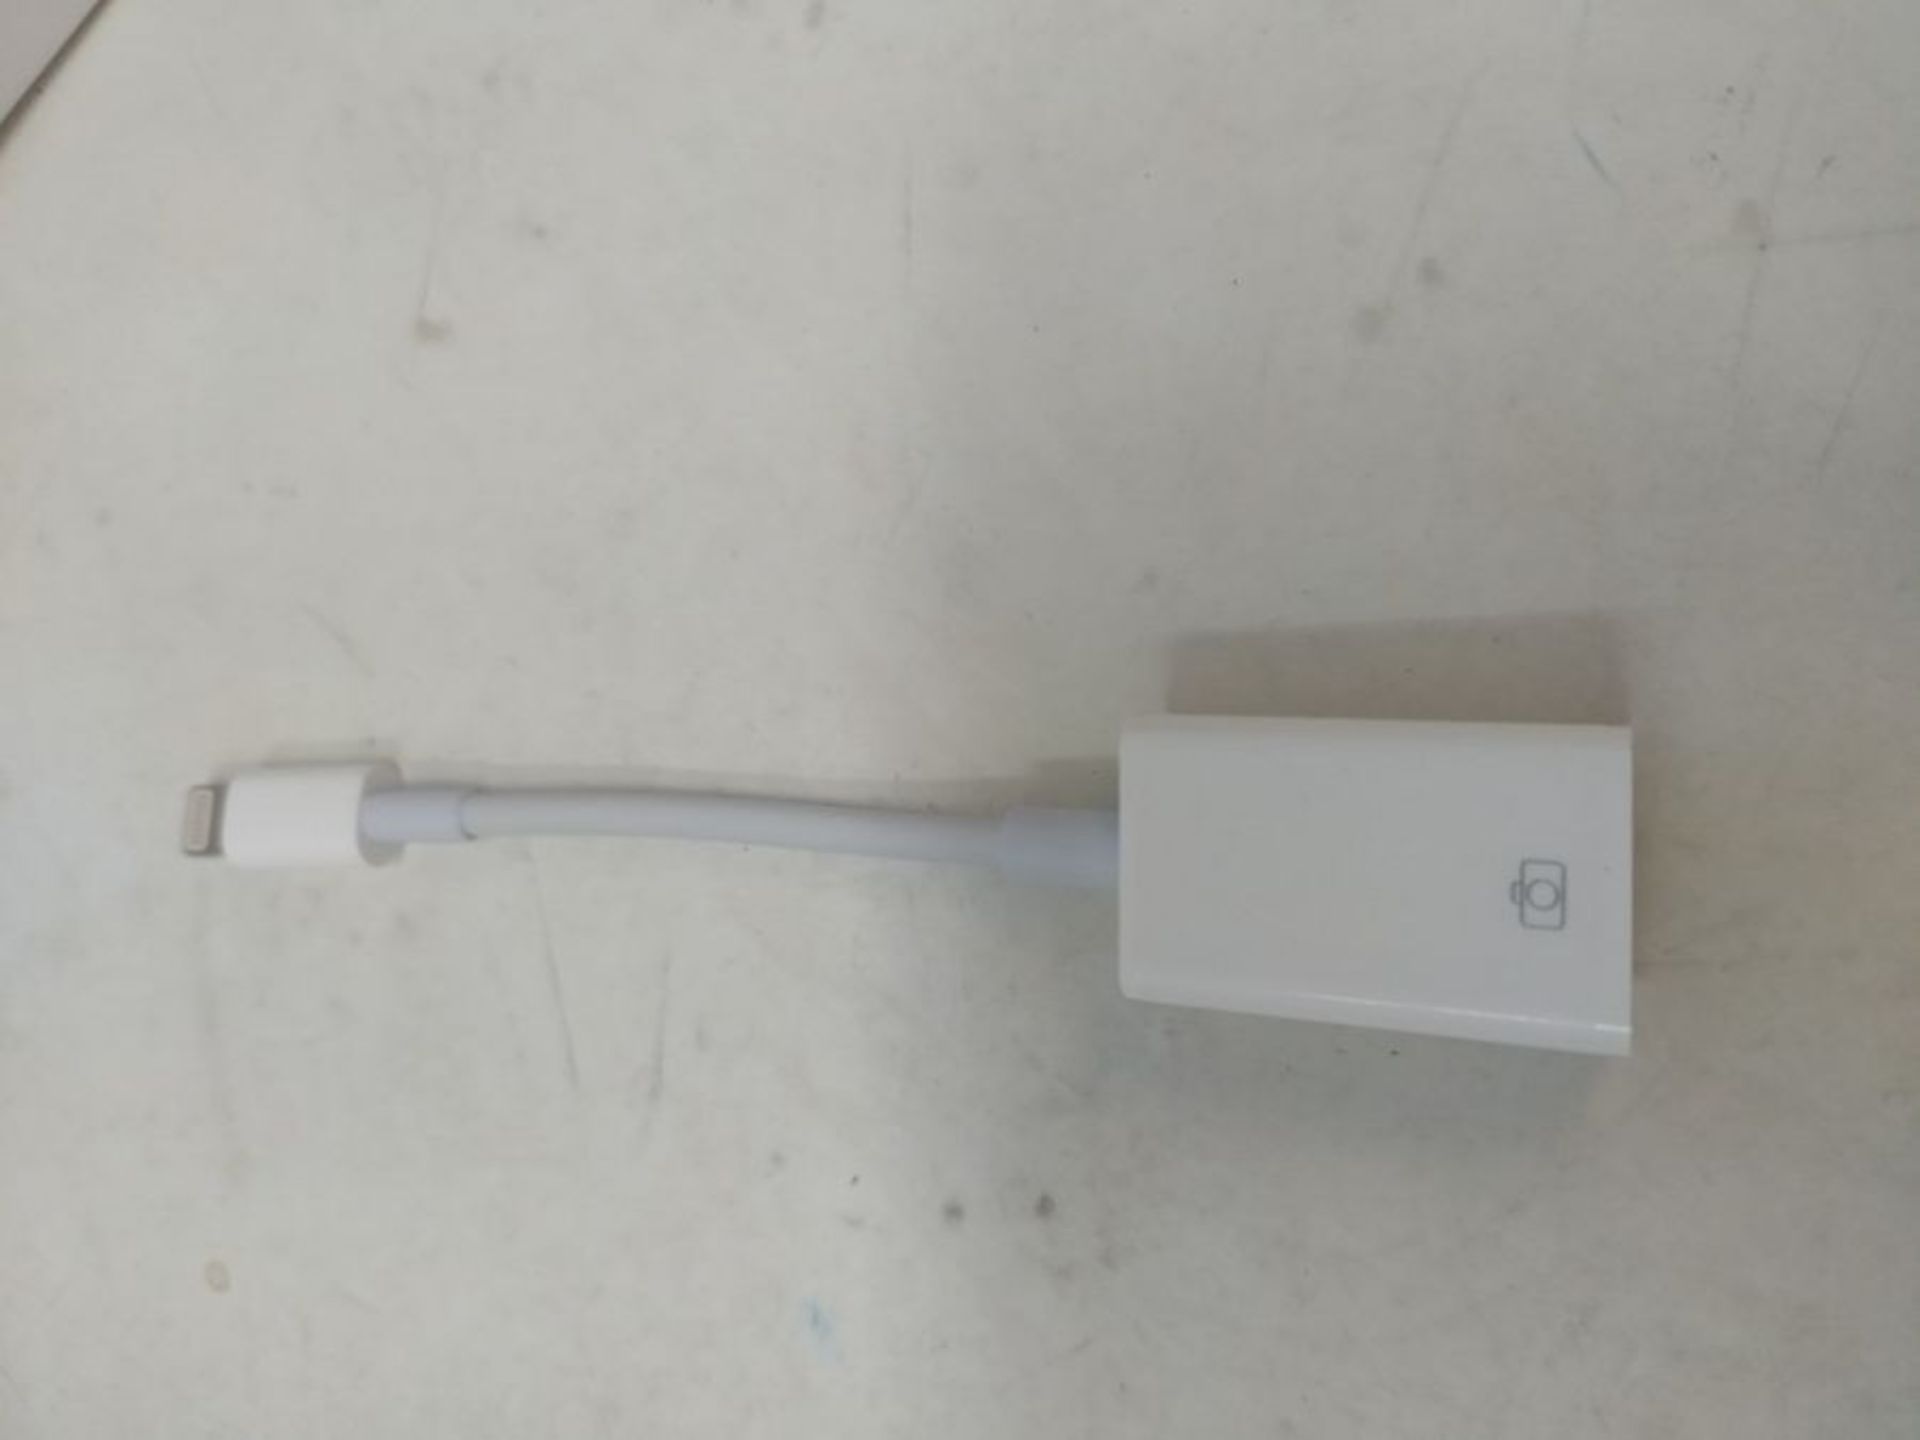 USB Camera Adapter, Upgrade USB 2.0 OTG Cable adapter Lightning to USB Female Adapter